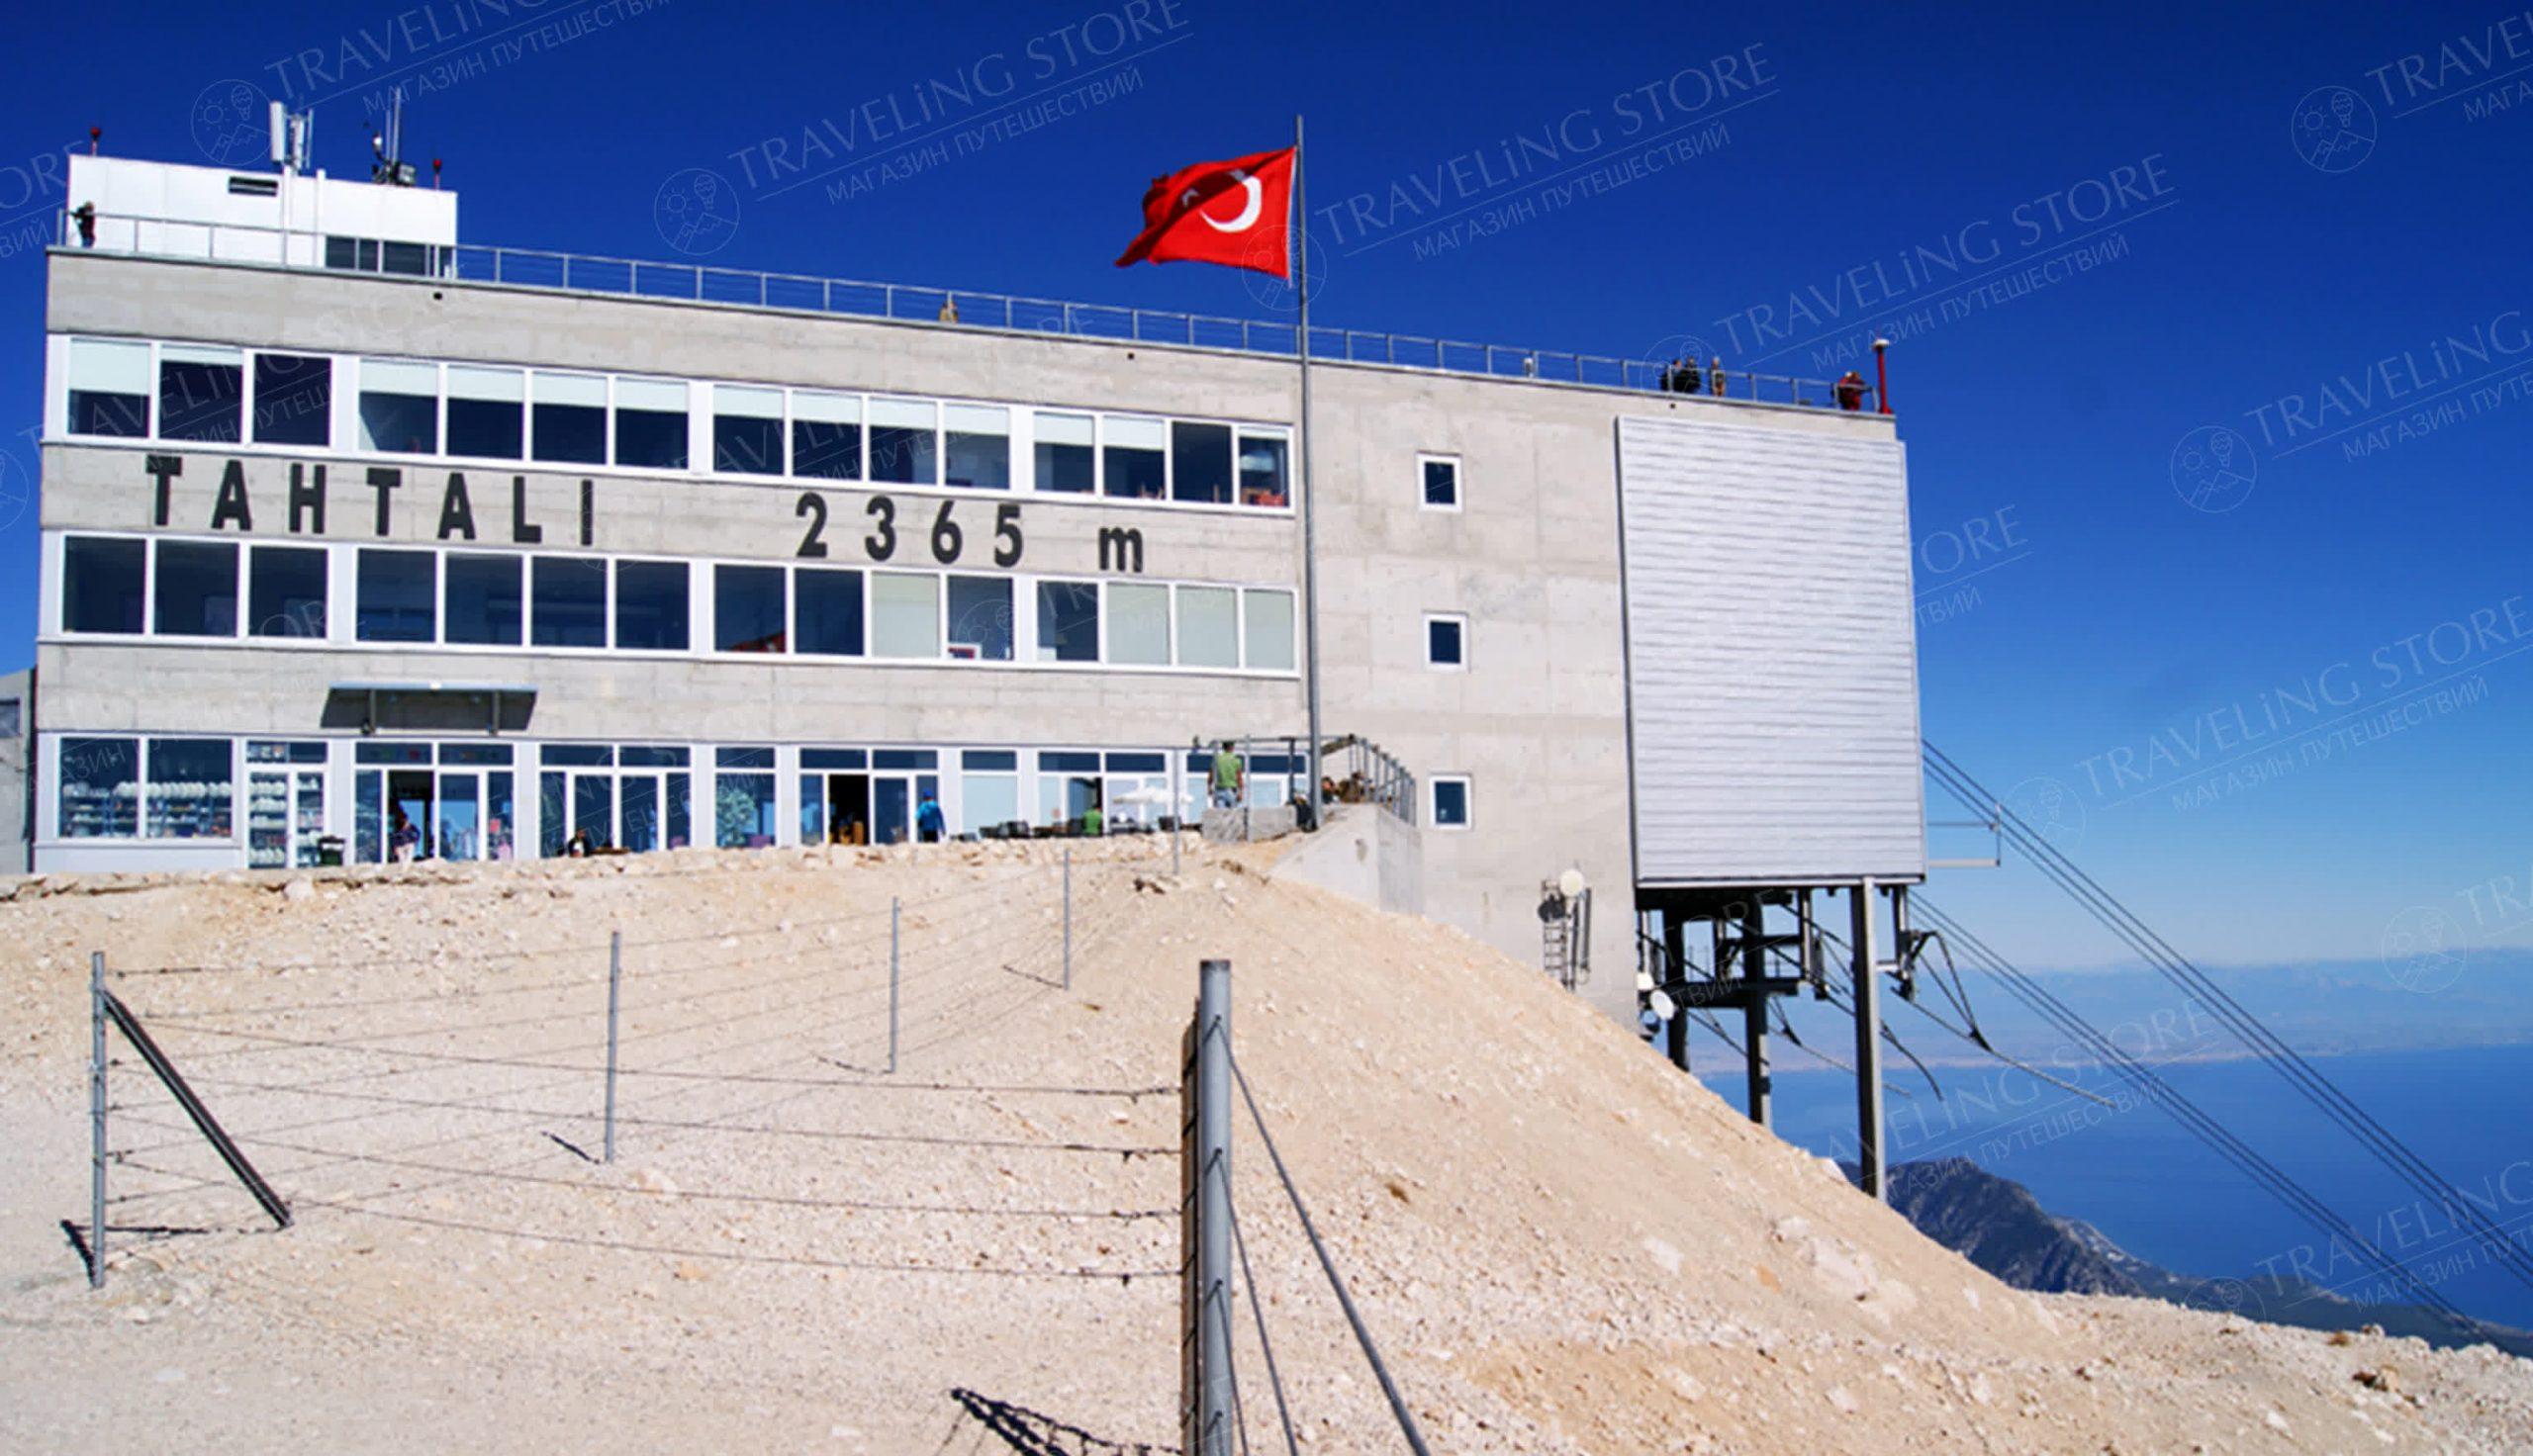 Mount Tahtali Tour (Olympos) from Antalya